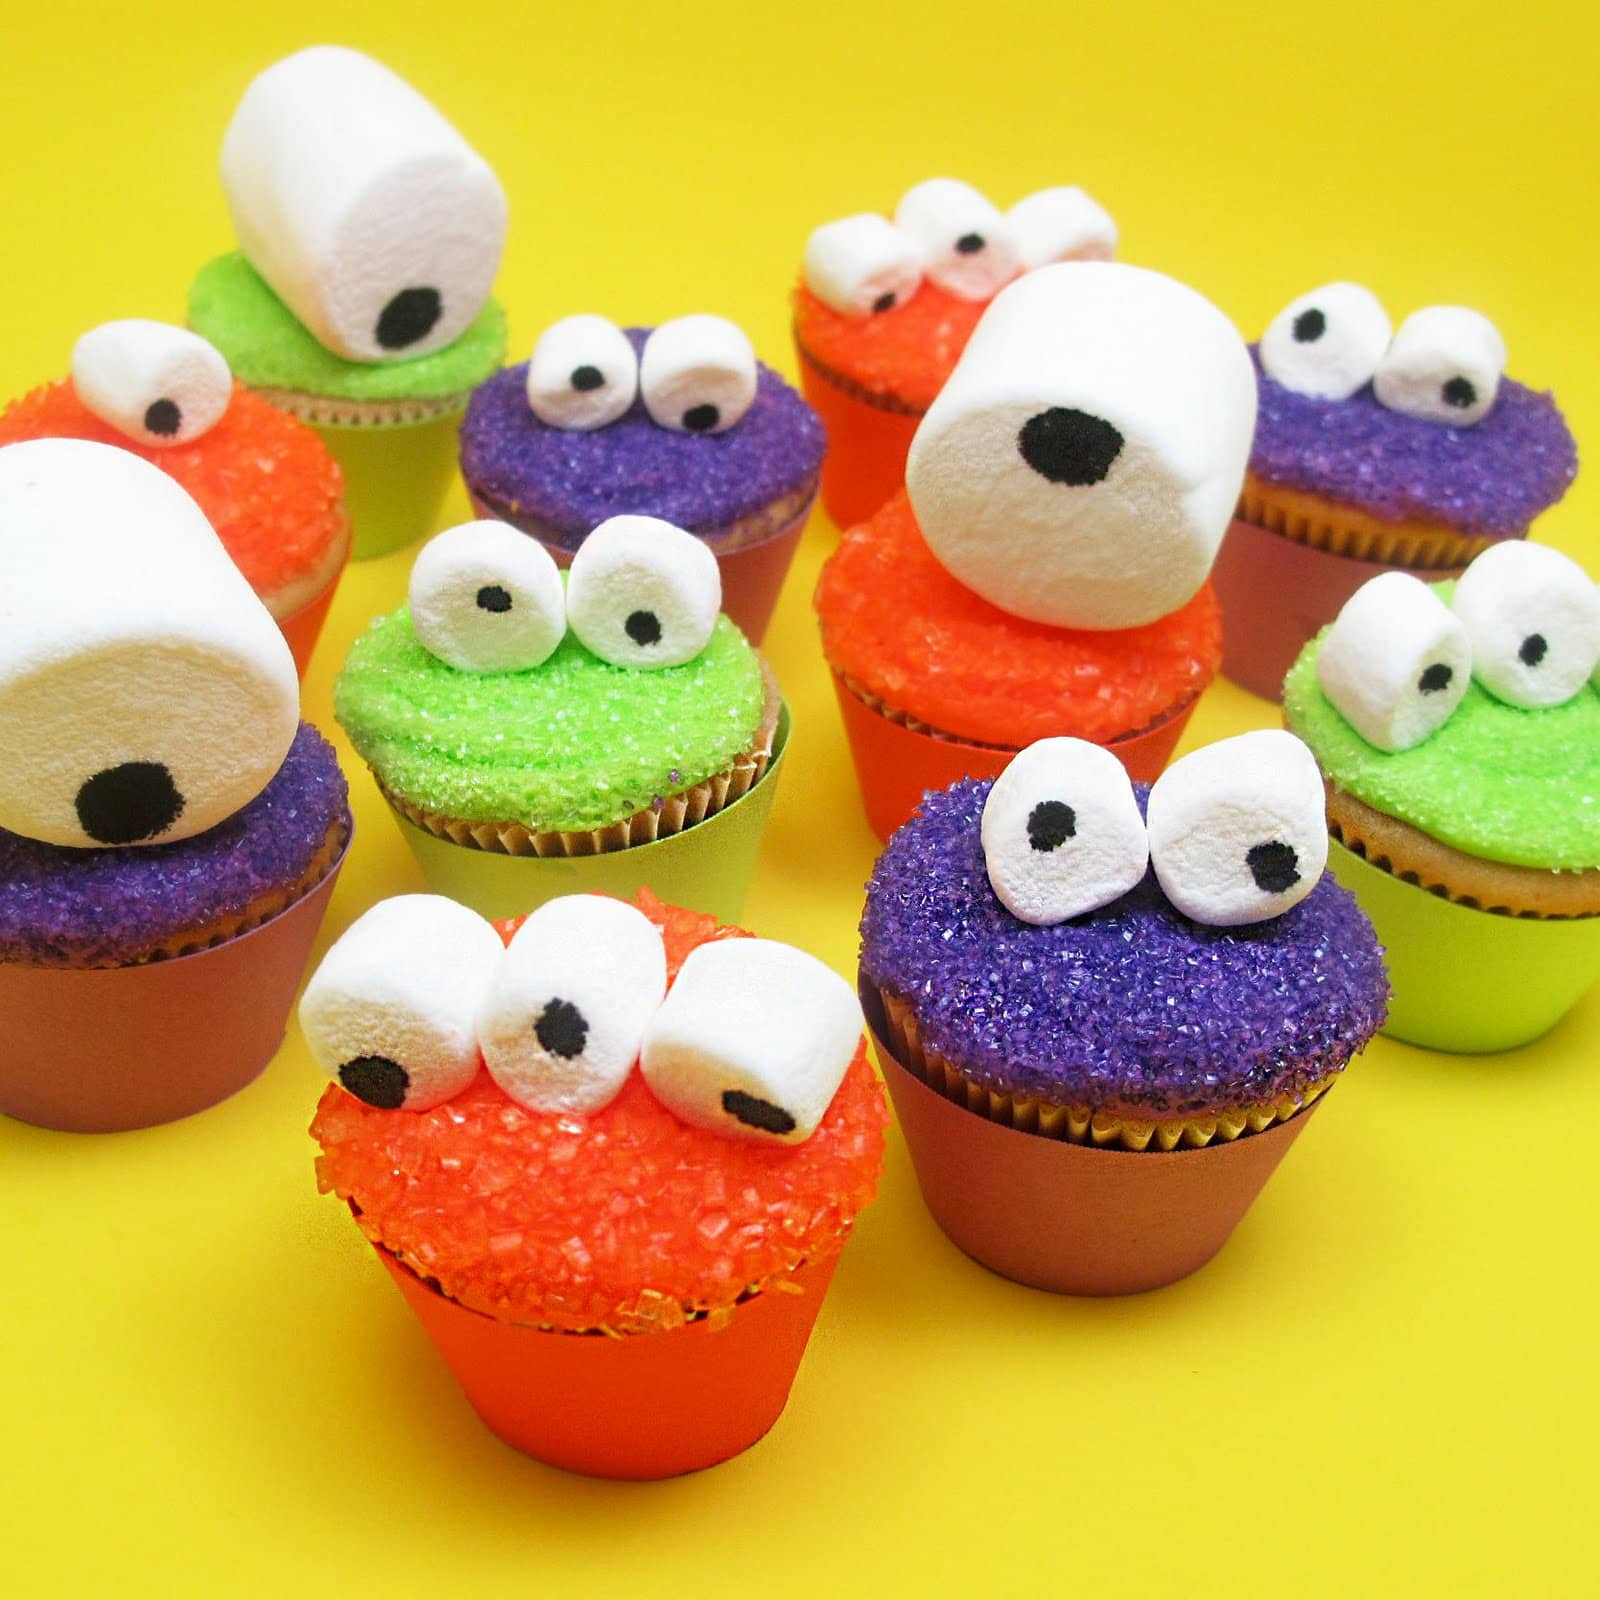 Mini Halloween Cupcakes
 mini monster cupcakes for an easy Halloween treat idea